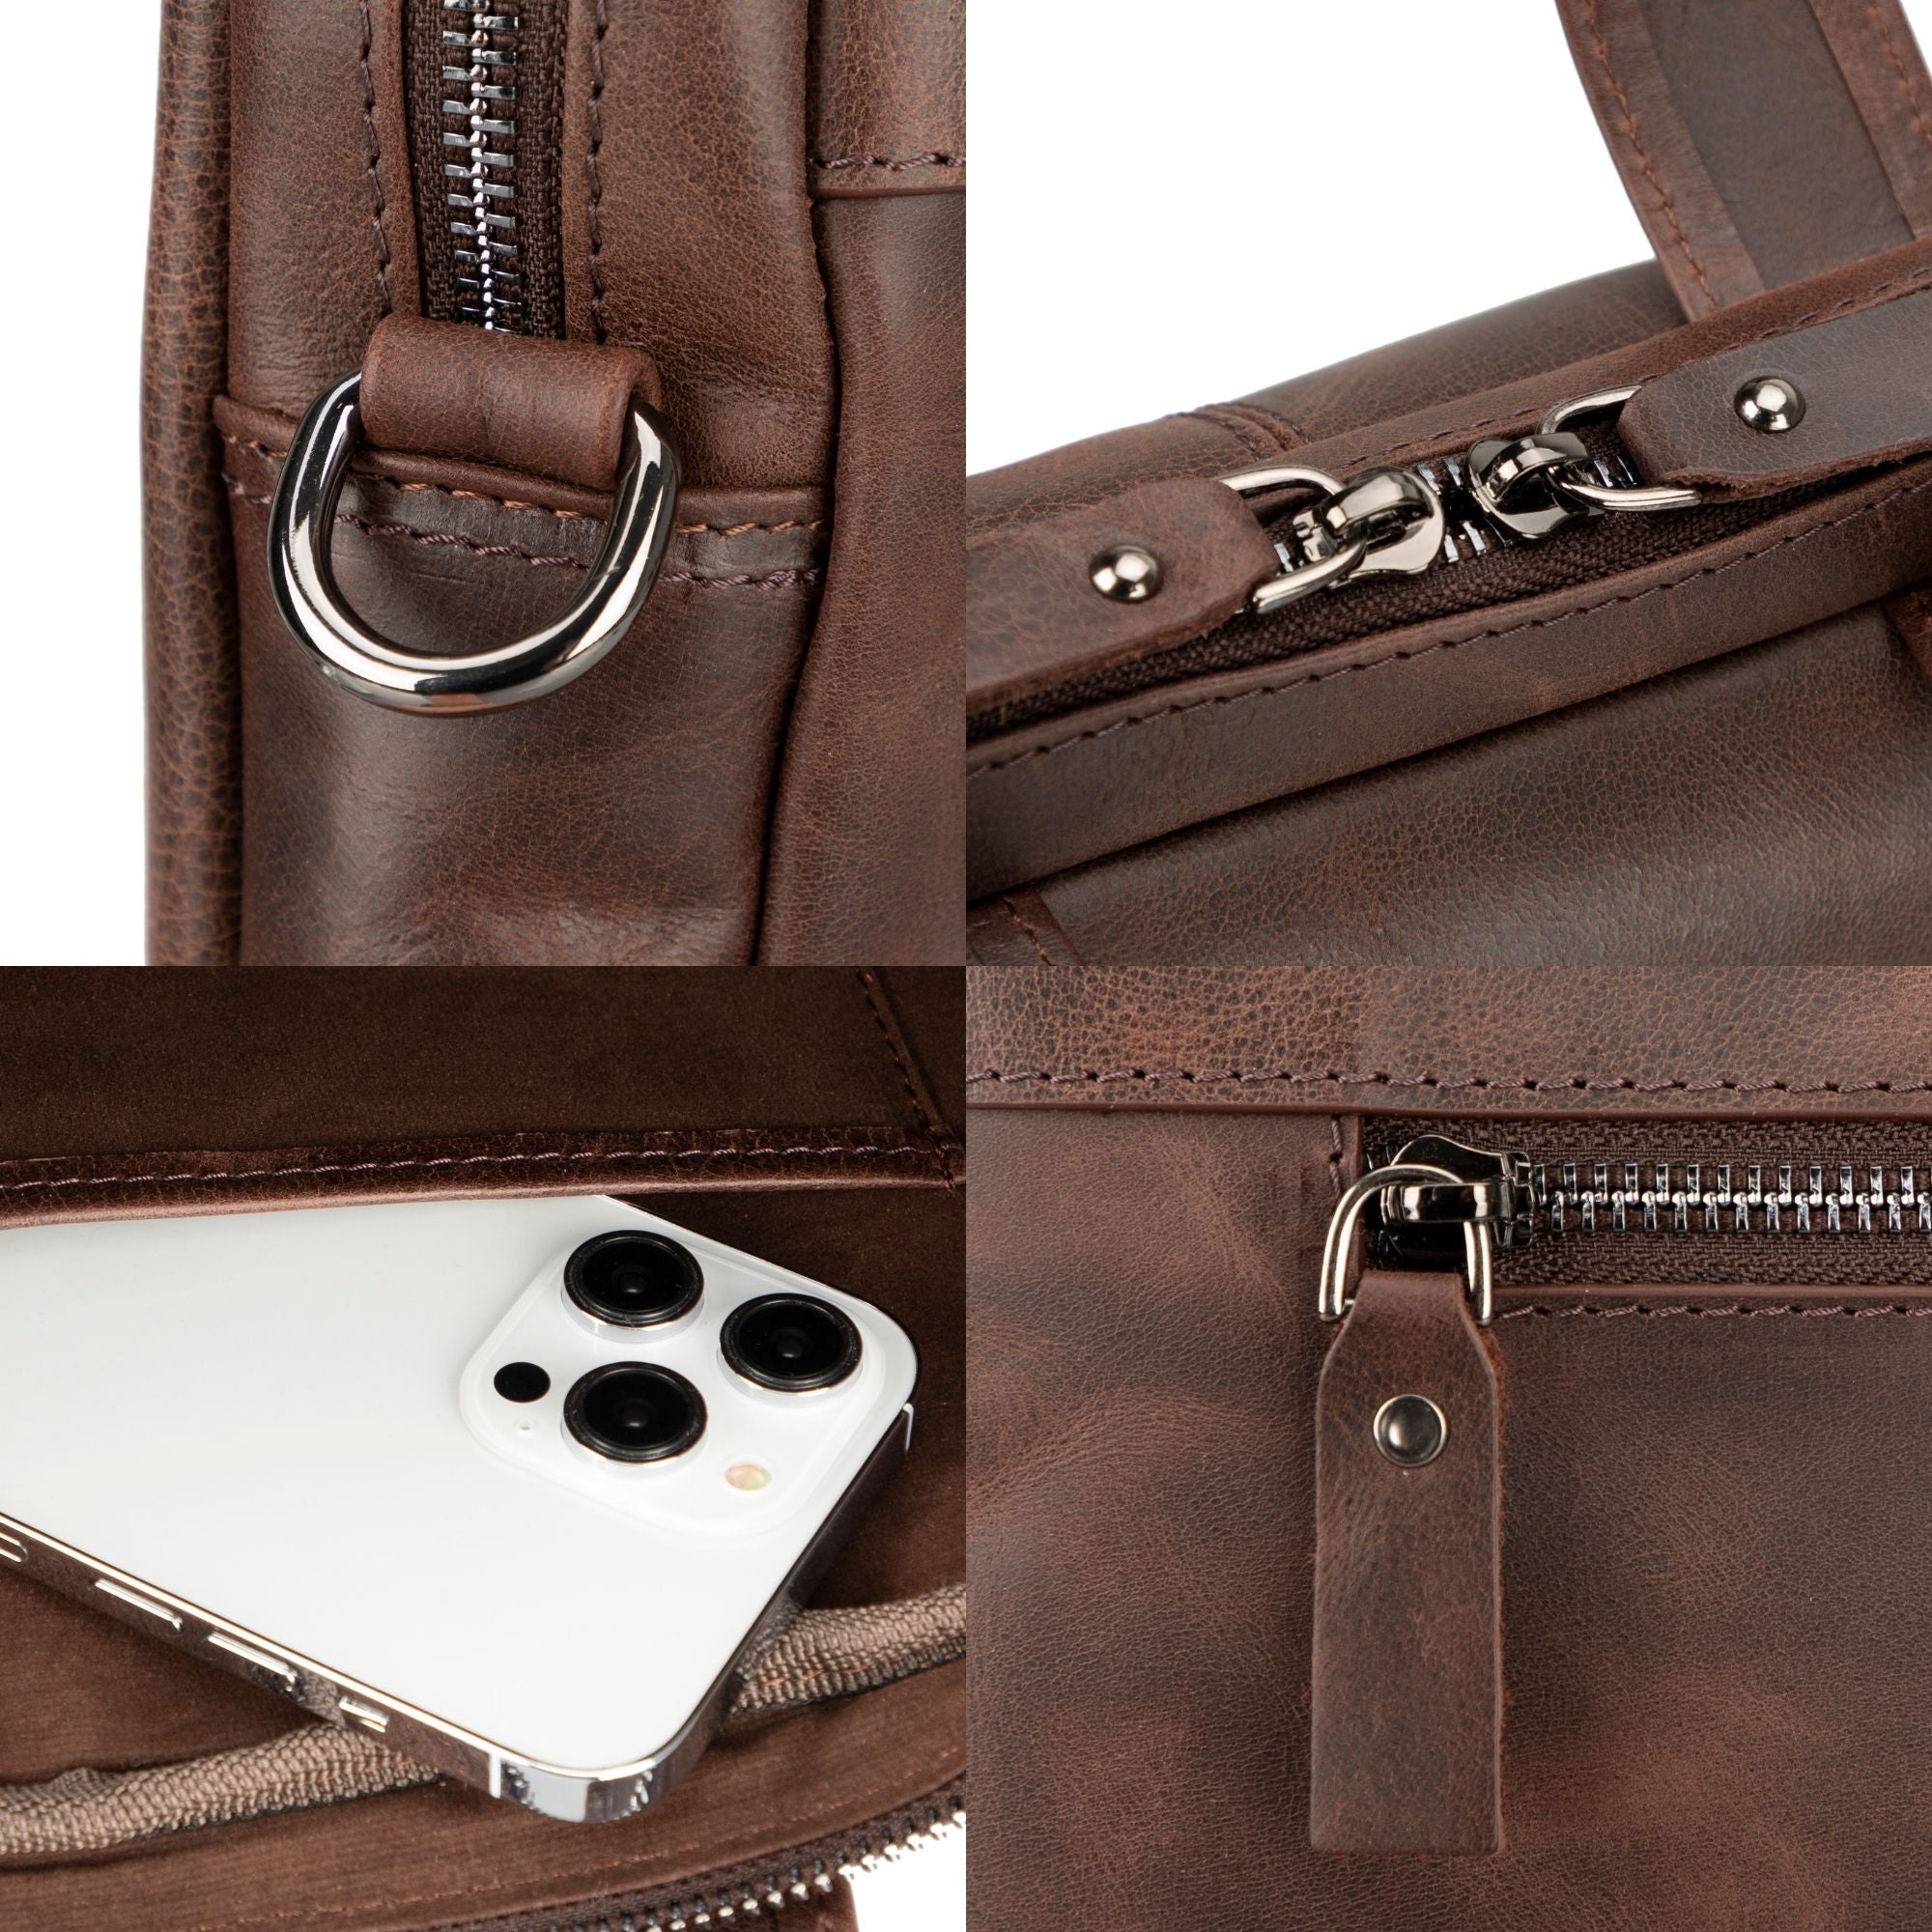 Afton MacBook Leather Sleeve and Bag - 14 Inches - Dark Brown - TORONATA